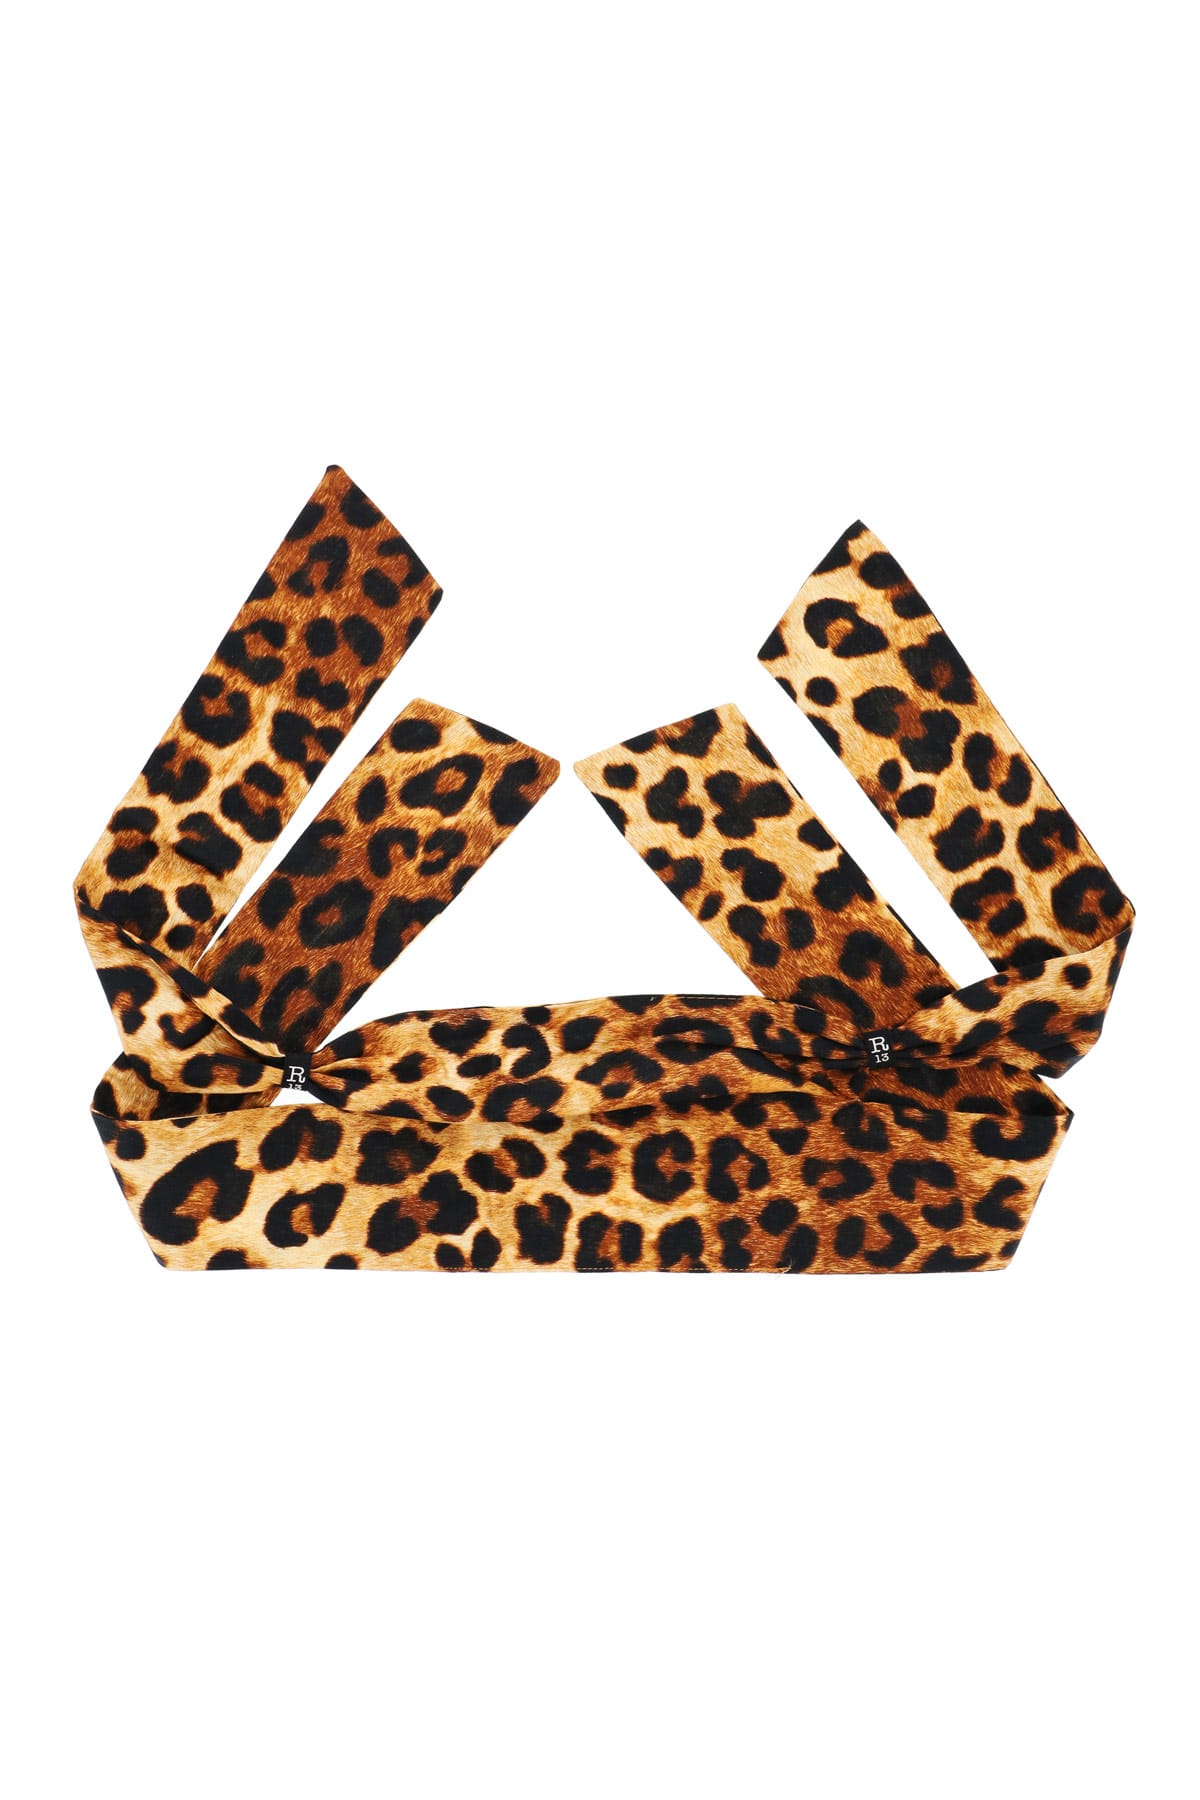 R13 Leopard Print Facescarf Mask